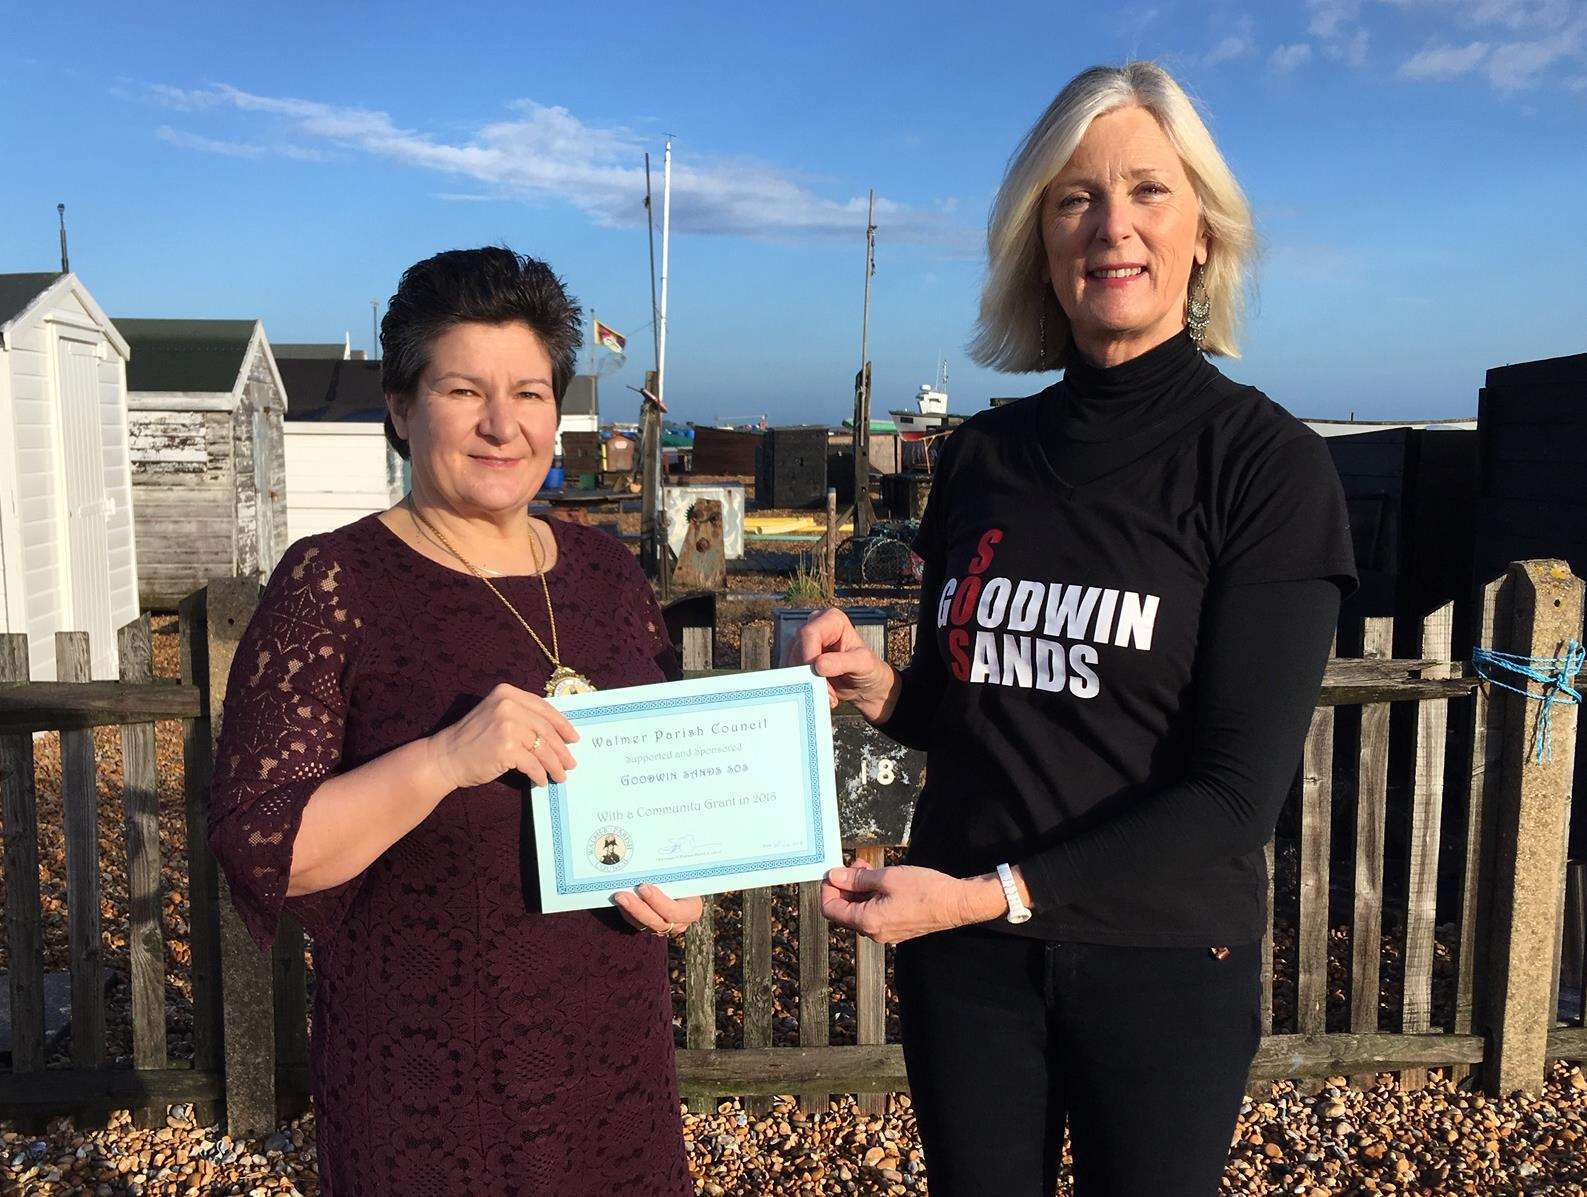 Sue Le Chevalier presents the cheque to campaigner Joanna Thomson. Picture: Goodwin Sands SOS